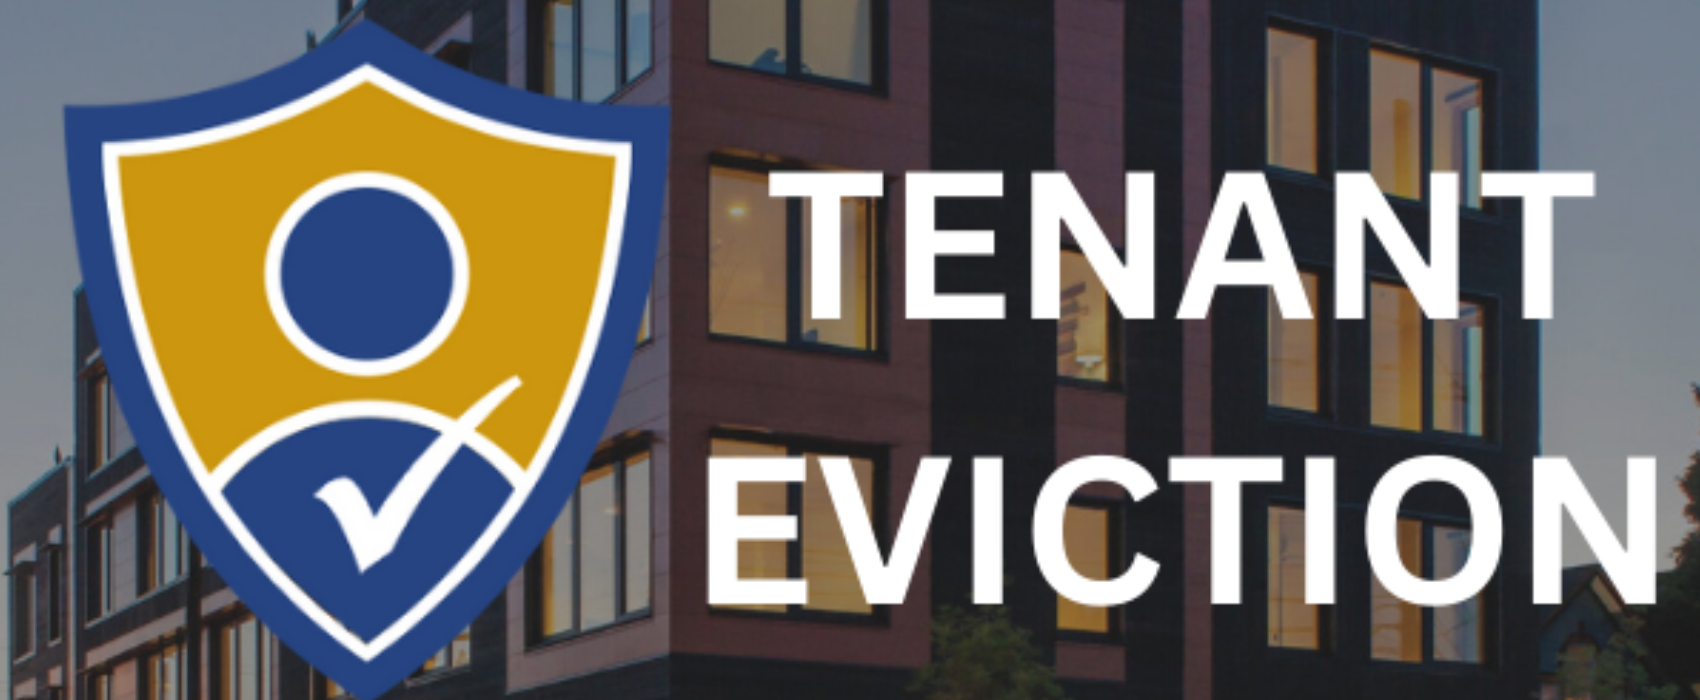 tenant eviction records